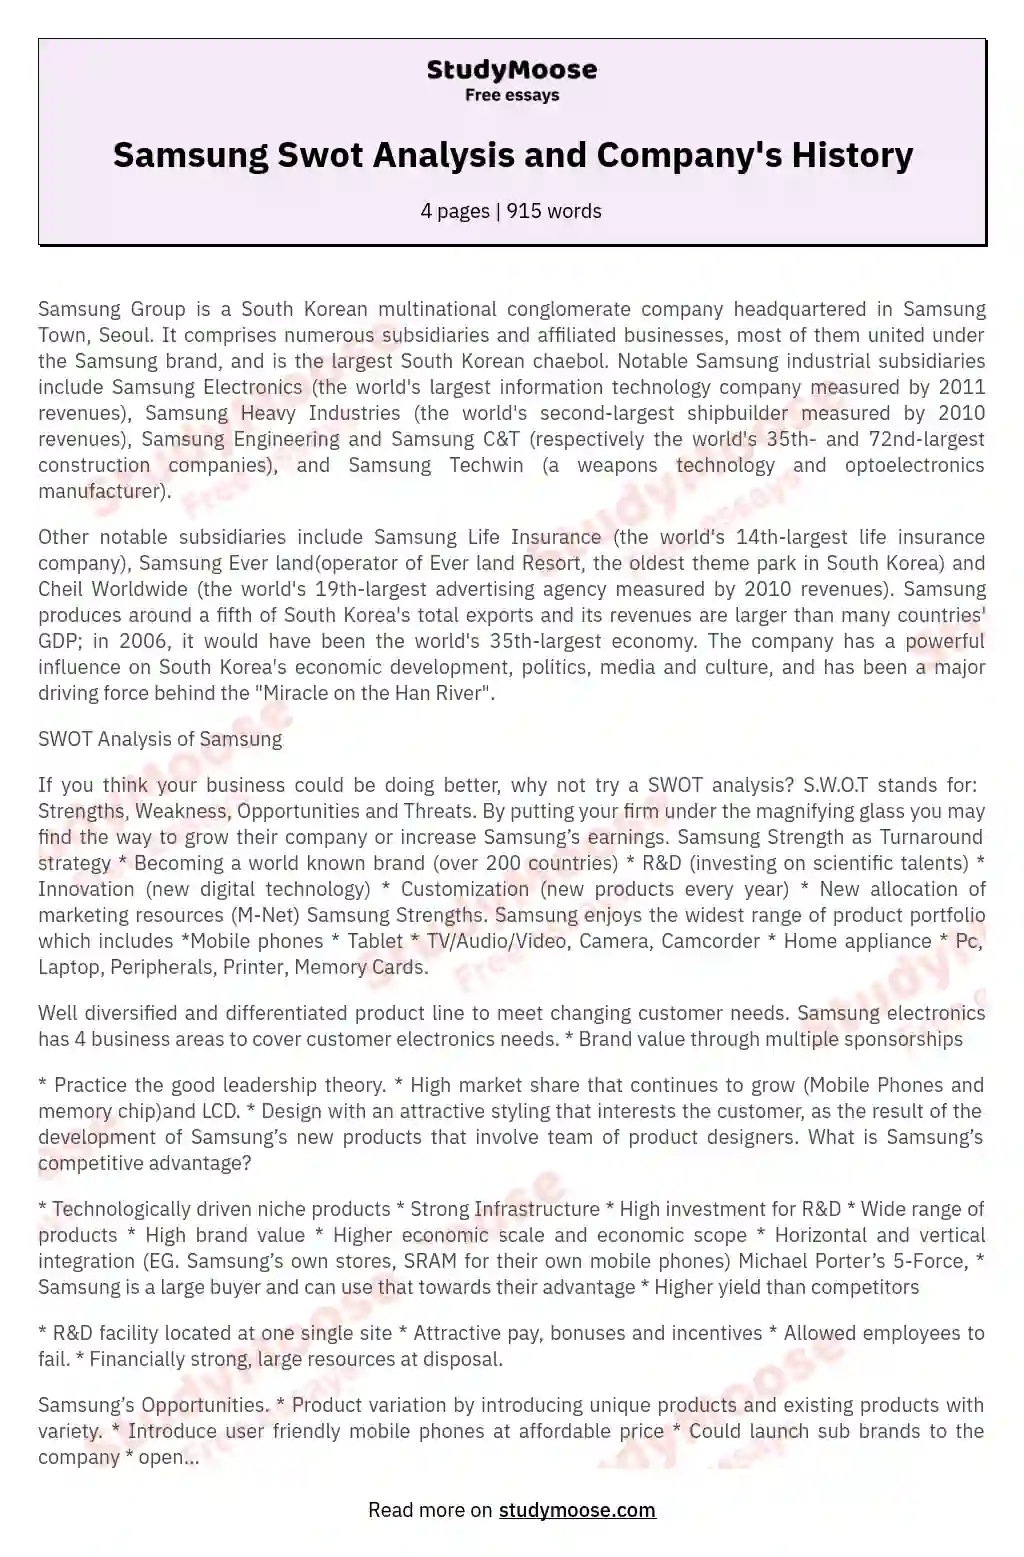 Samsung Swot Analysis and Company's History